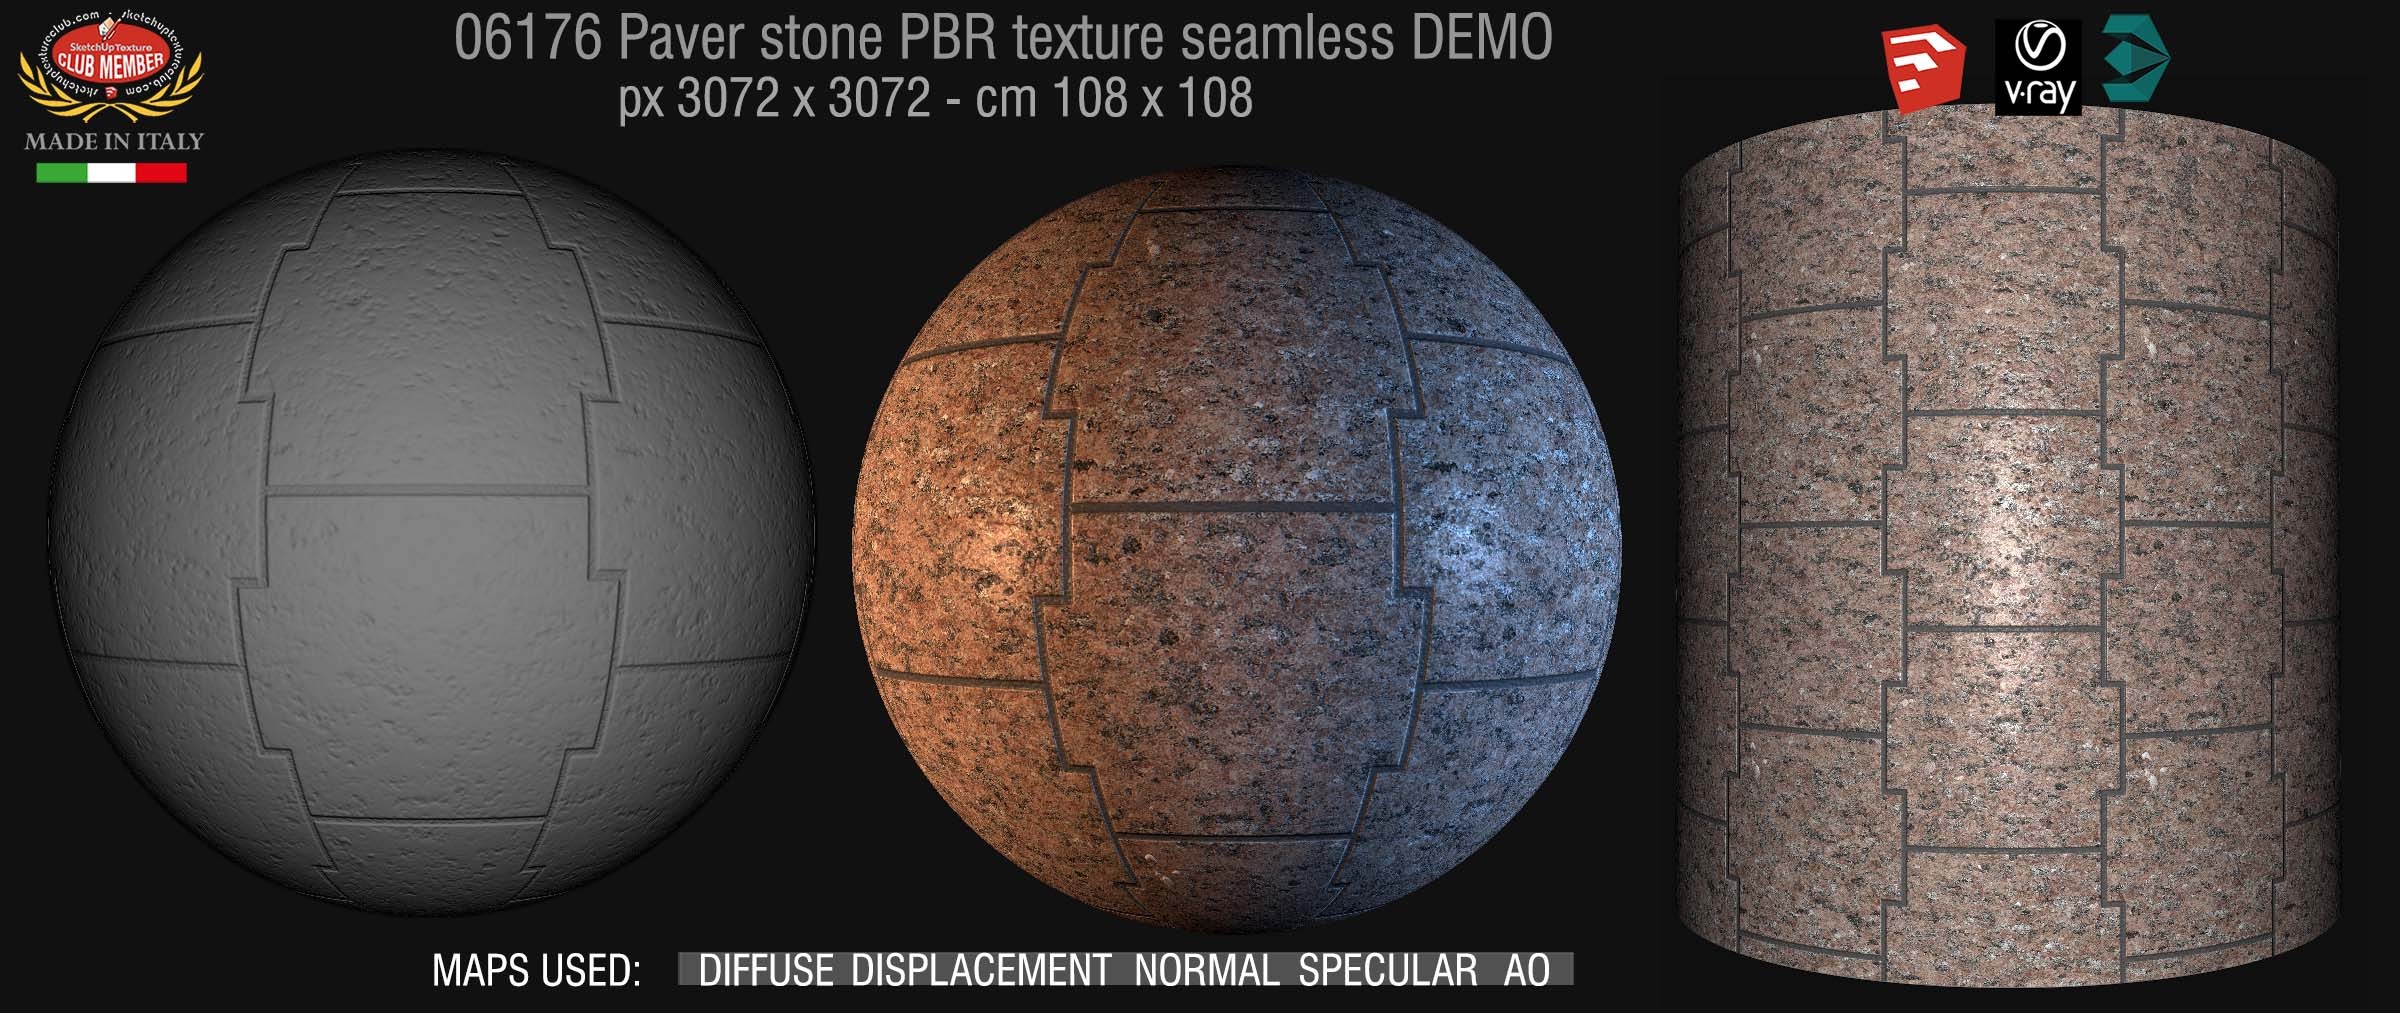 06176 paver stone PBR texture seamless DEMO